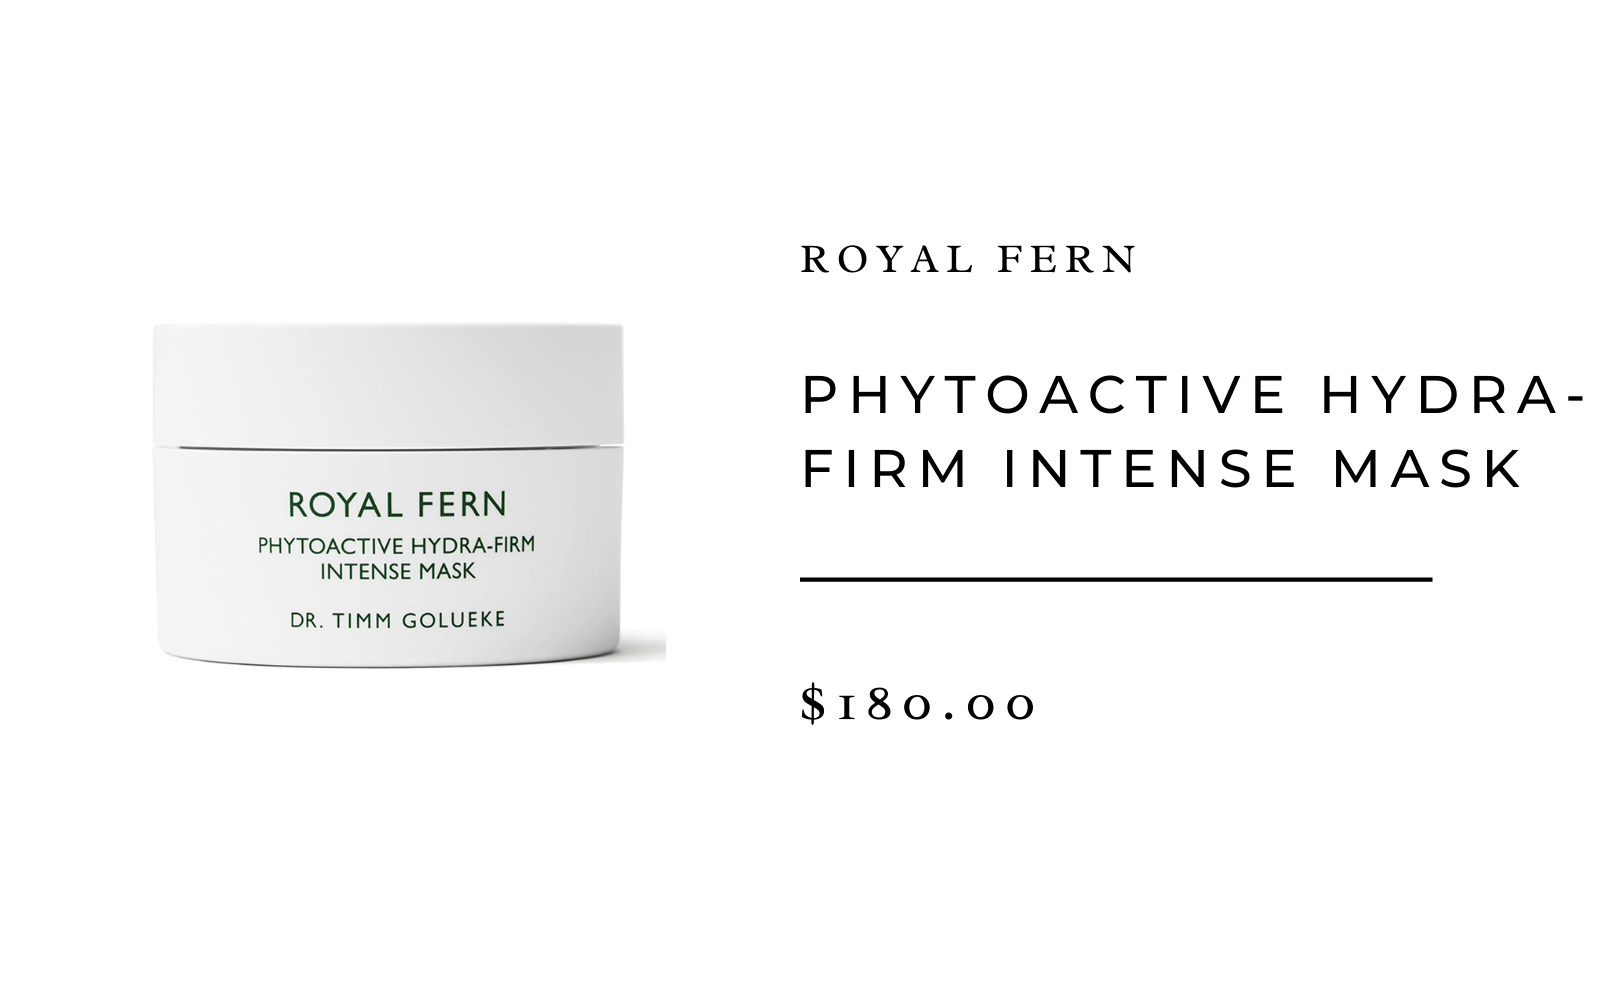 Royal Fern Phytoactive Hydra-Firm Intense Mask